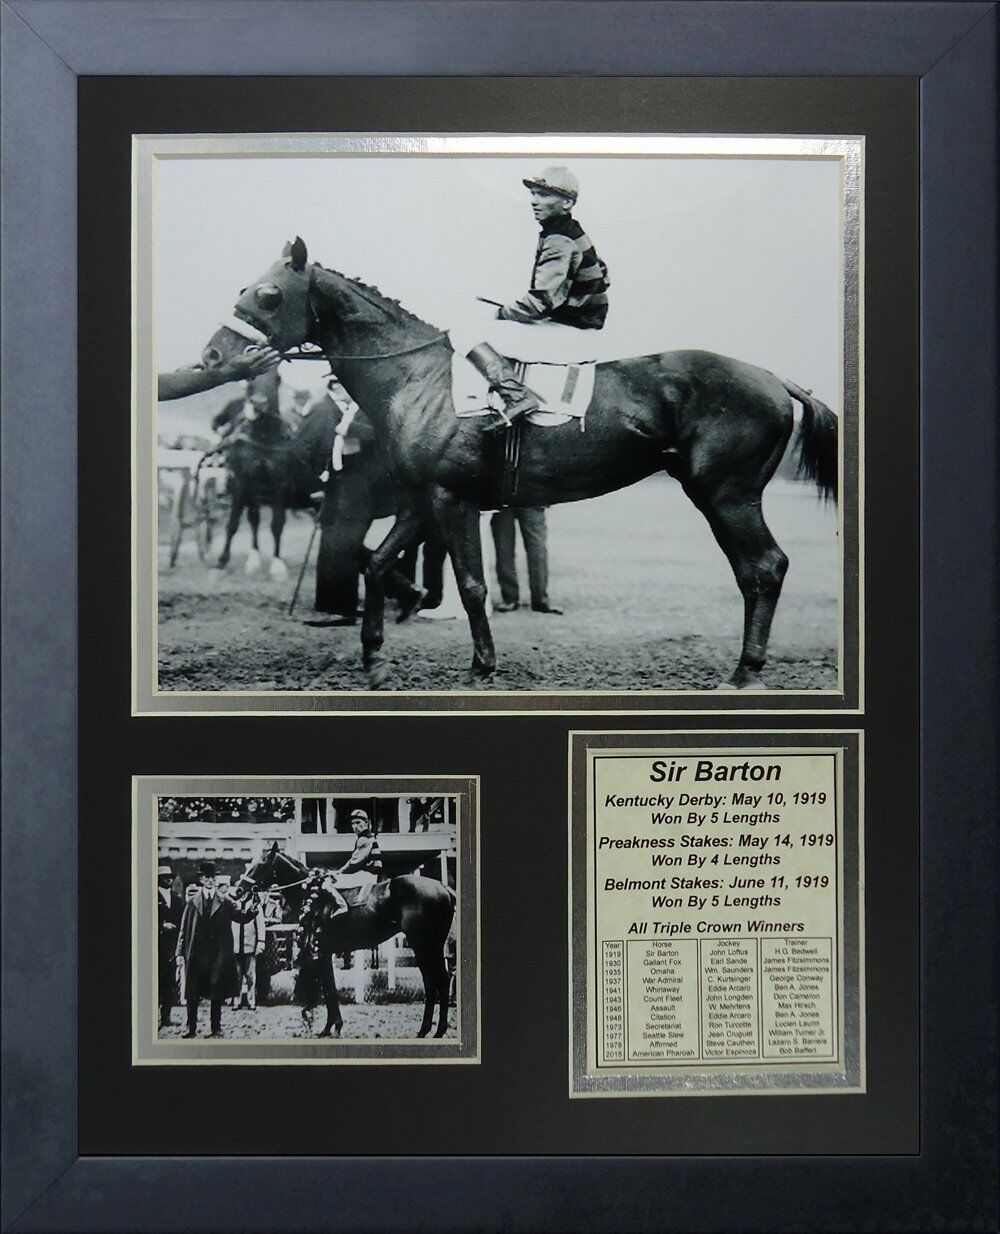 11x14 Framed Sir Barton 8x10 Photo 1919 Triple Crown Winner John Loftus